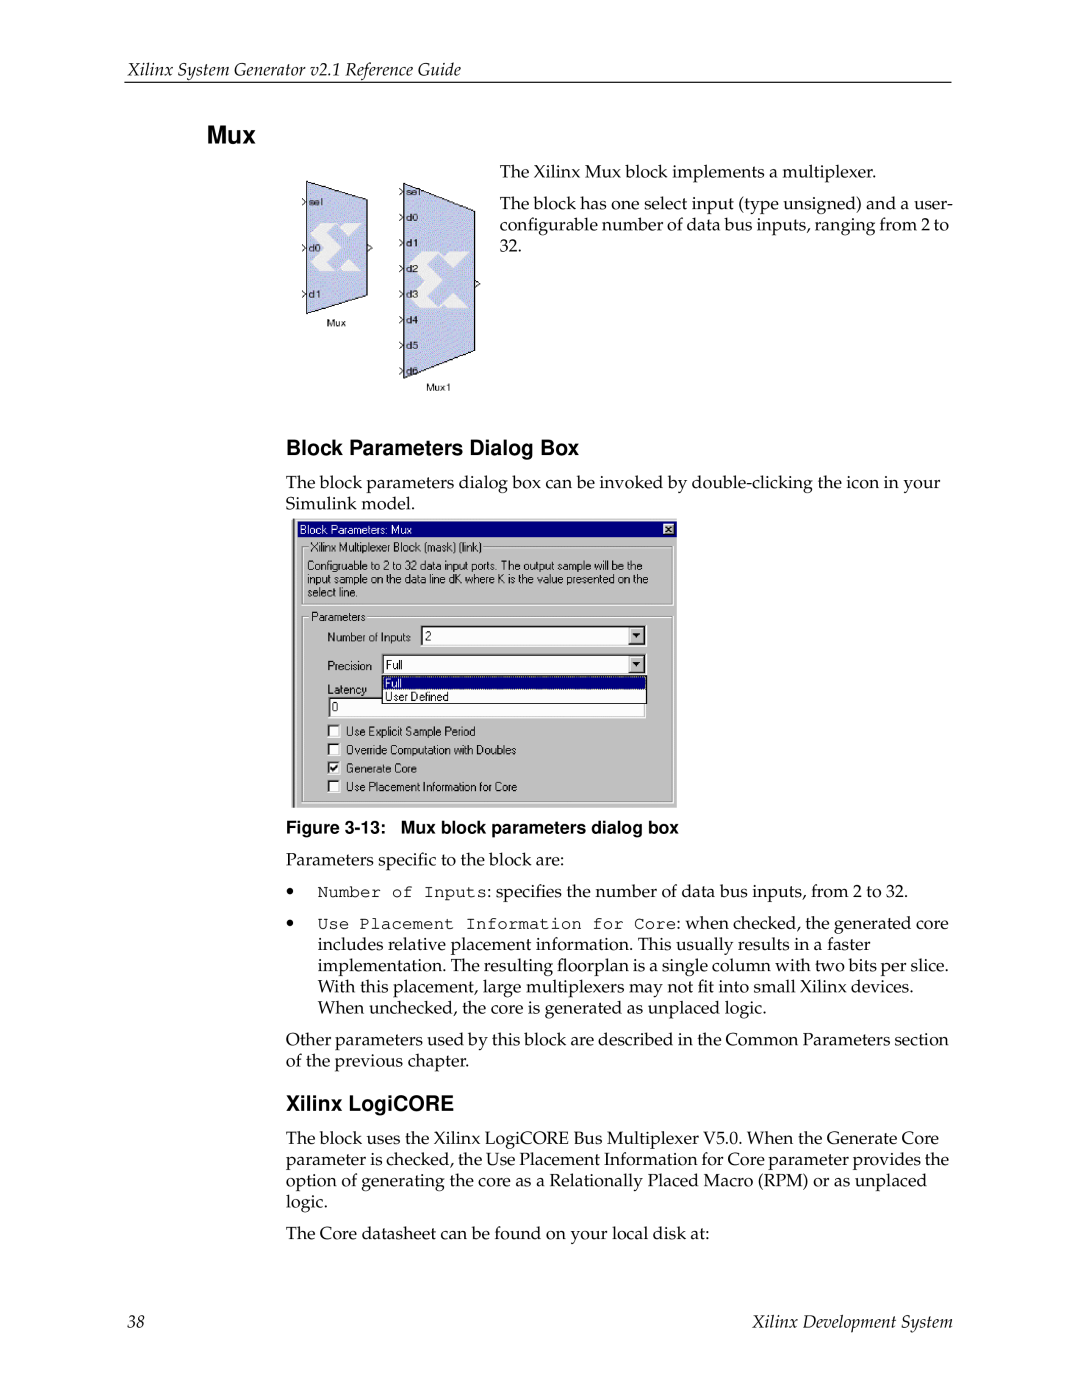 Xilinx V2.1 manual Block Parameters Dialog Box, Xilinx LogiCORE, Xilinx System Generator v2.1 Reference Guide 